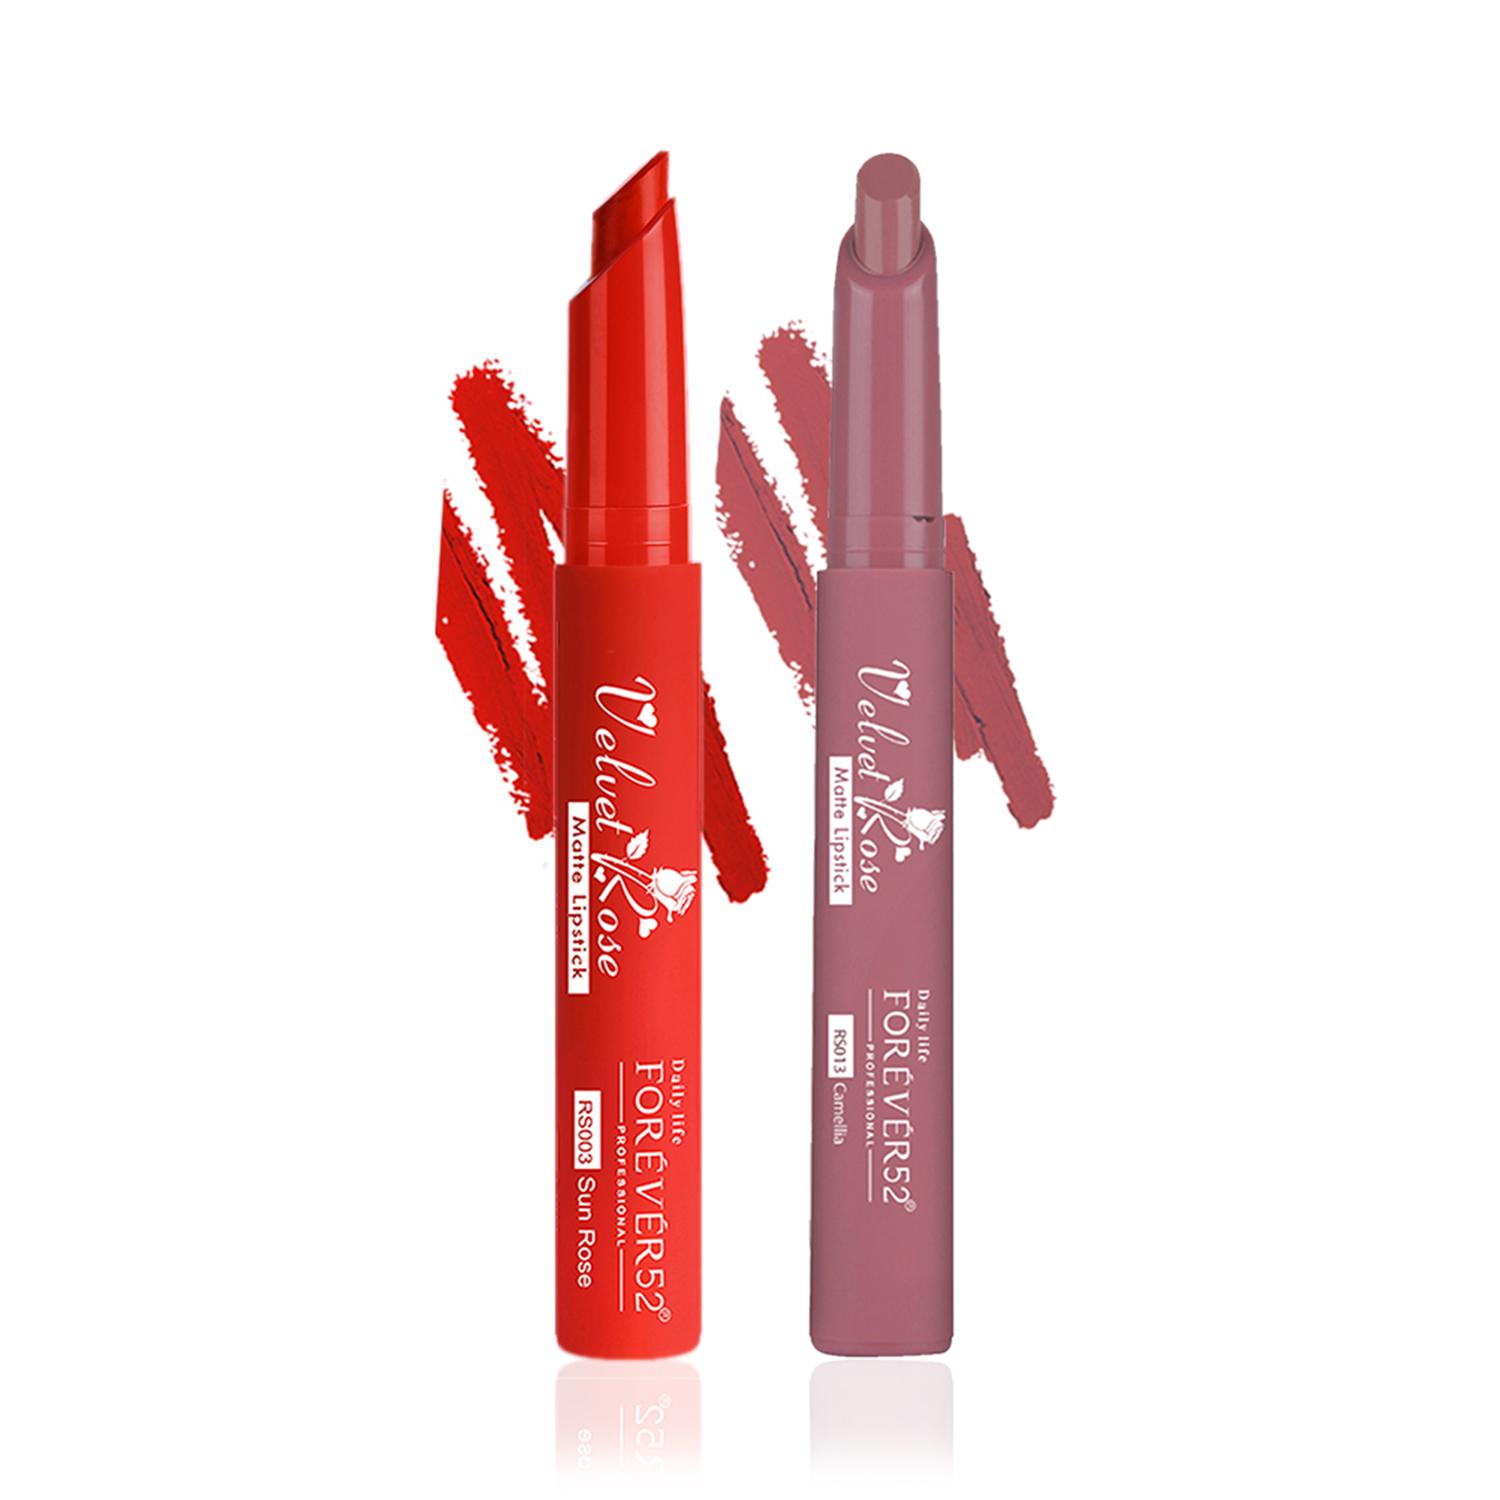 Daily Life Forever52 Velvet Rose Matte Lipstick Set of 2 Crayons Combo (Sun Rose,Camellia)